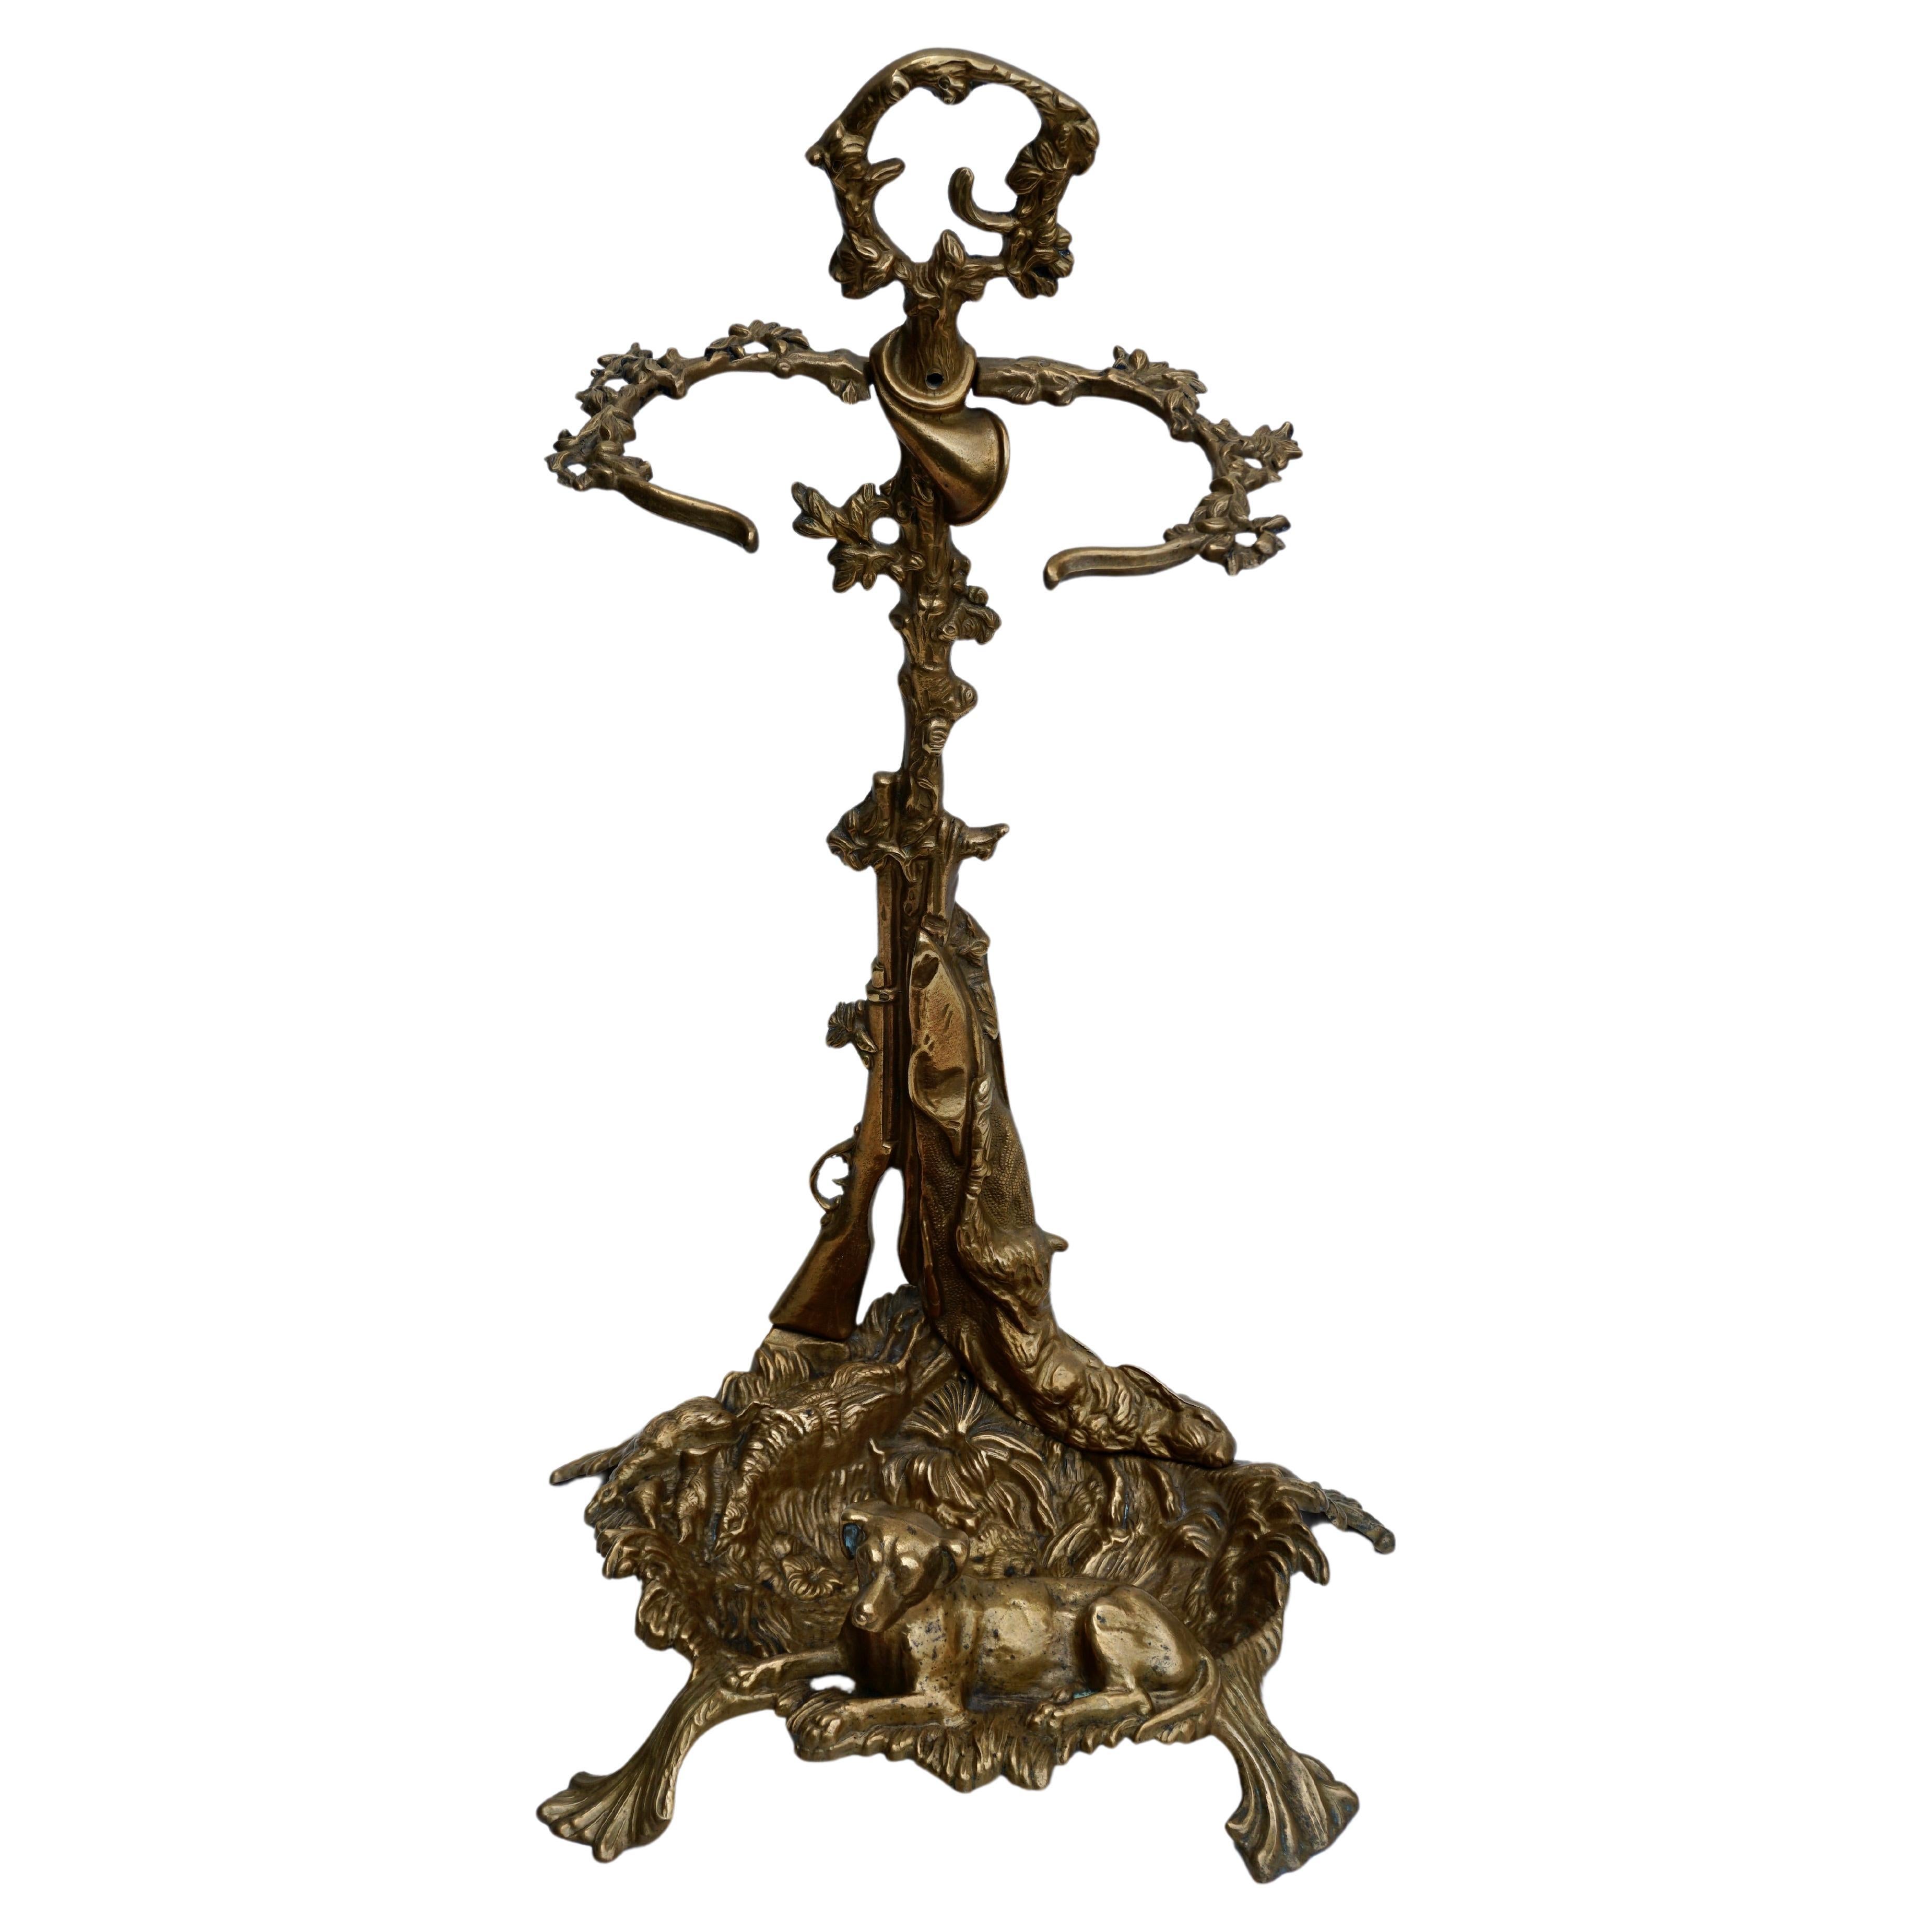  Stand Umbrella en bronze Napoléon III à motifs de chasse